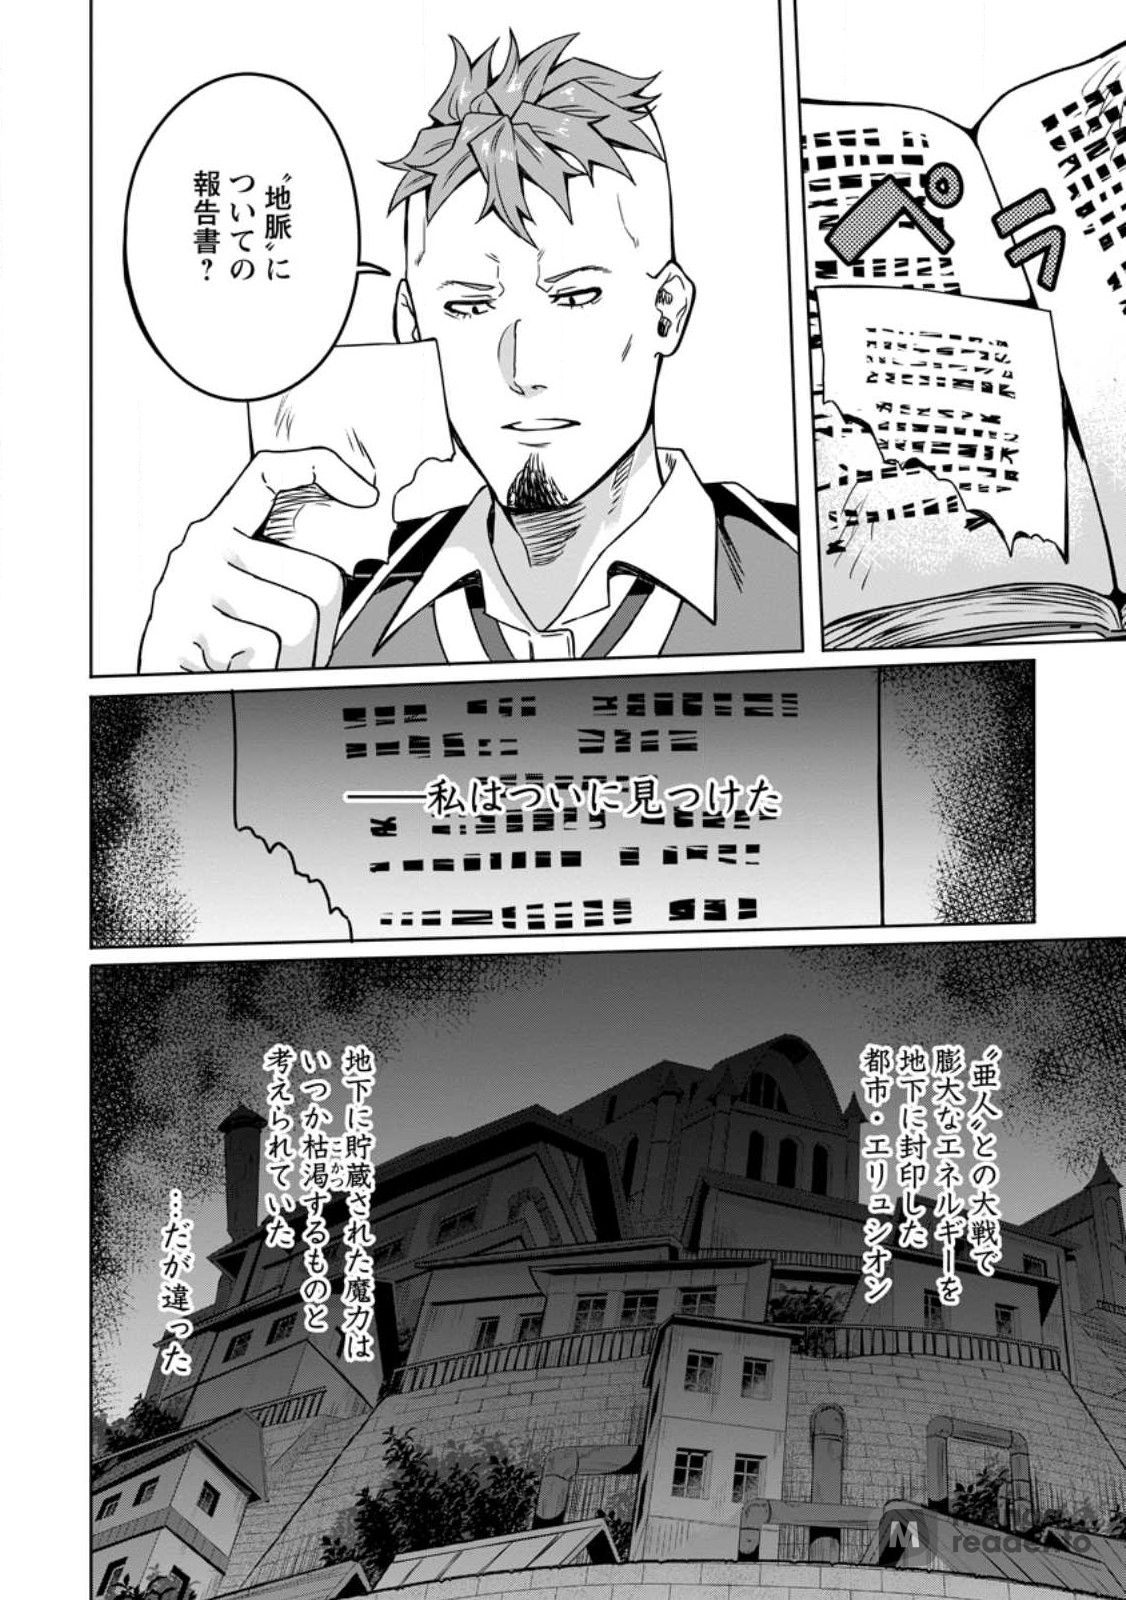 Guilty Gear Strive Online #73 - Boruto Manga Is Good, Fight Me